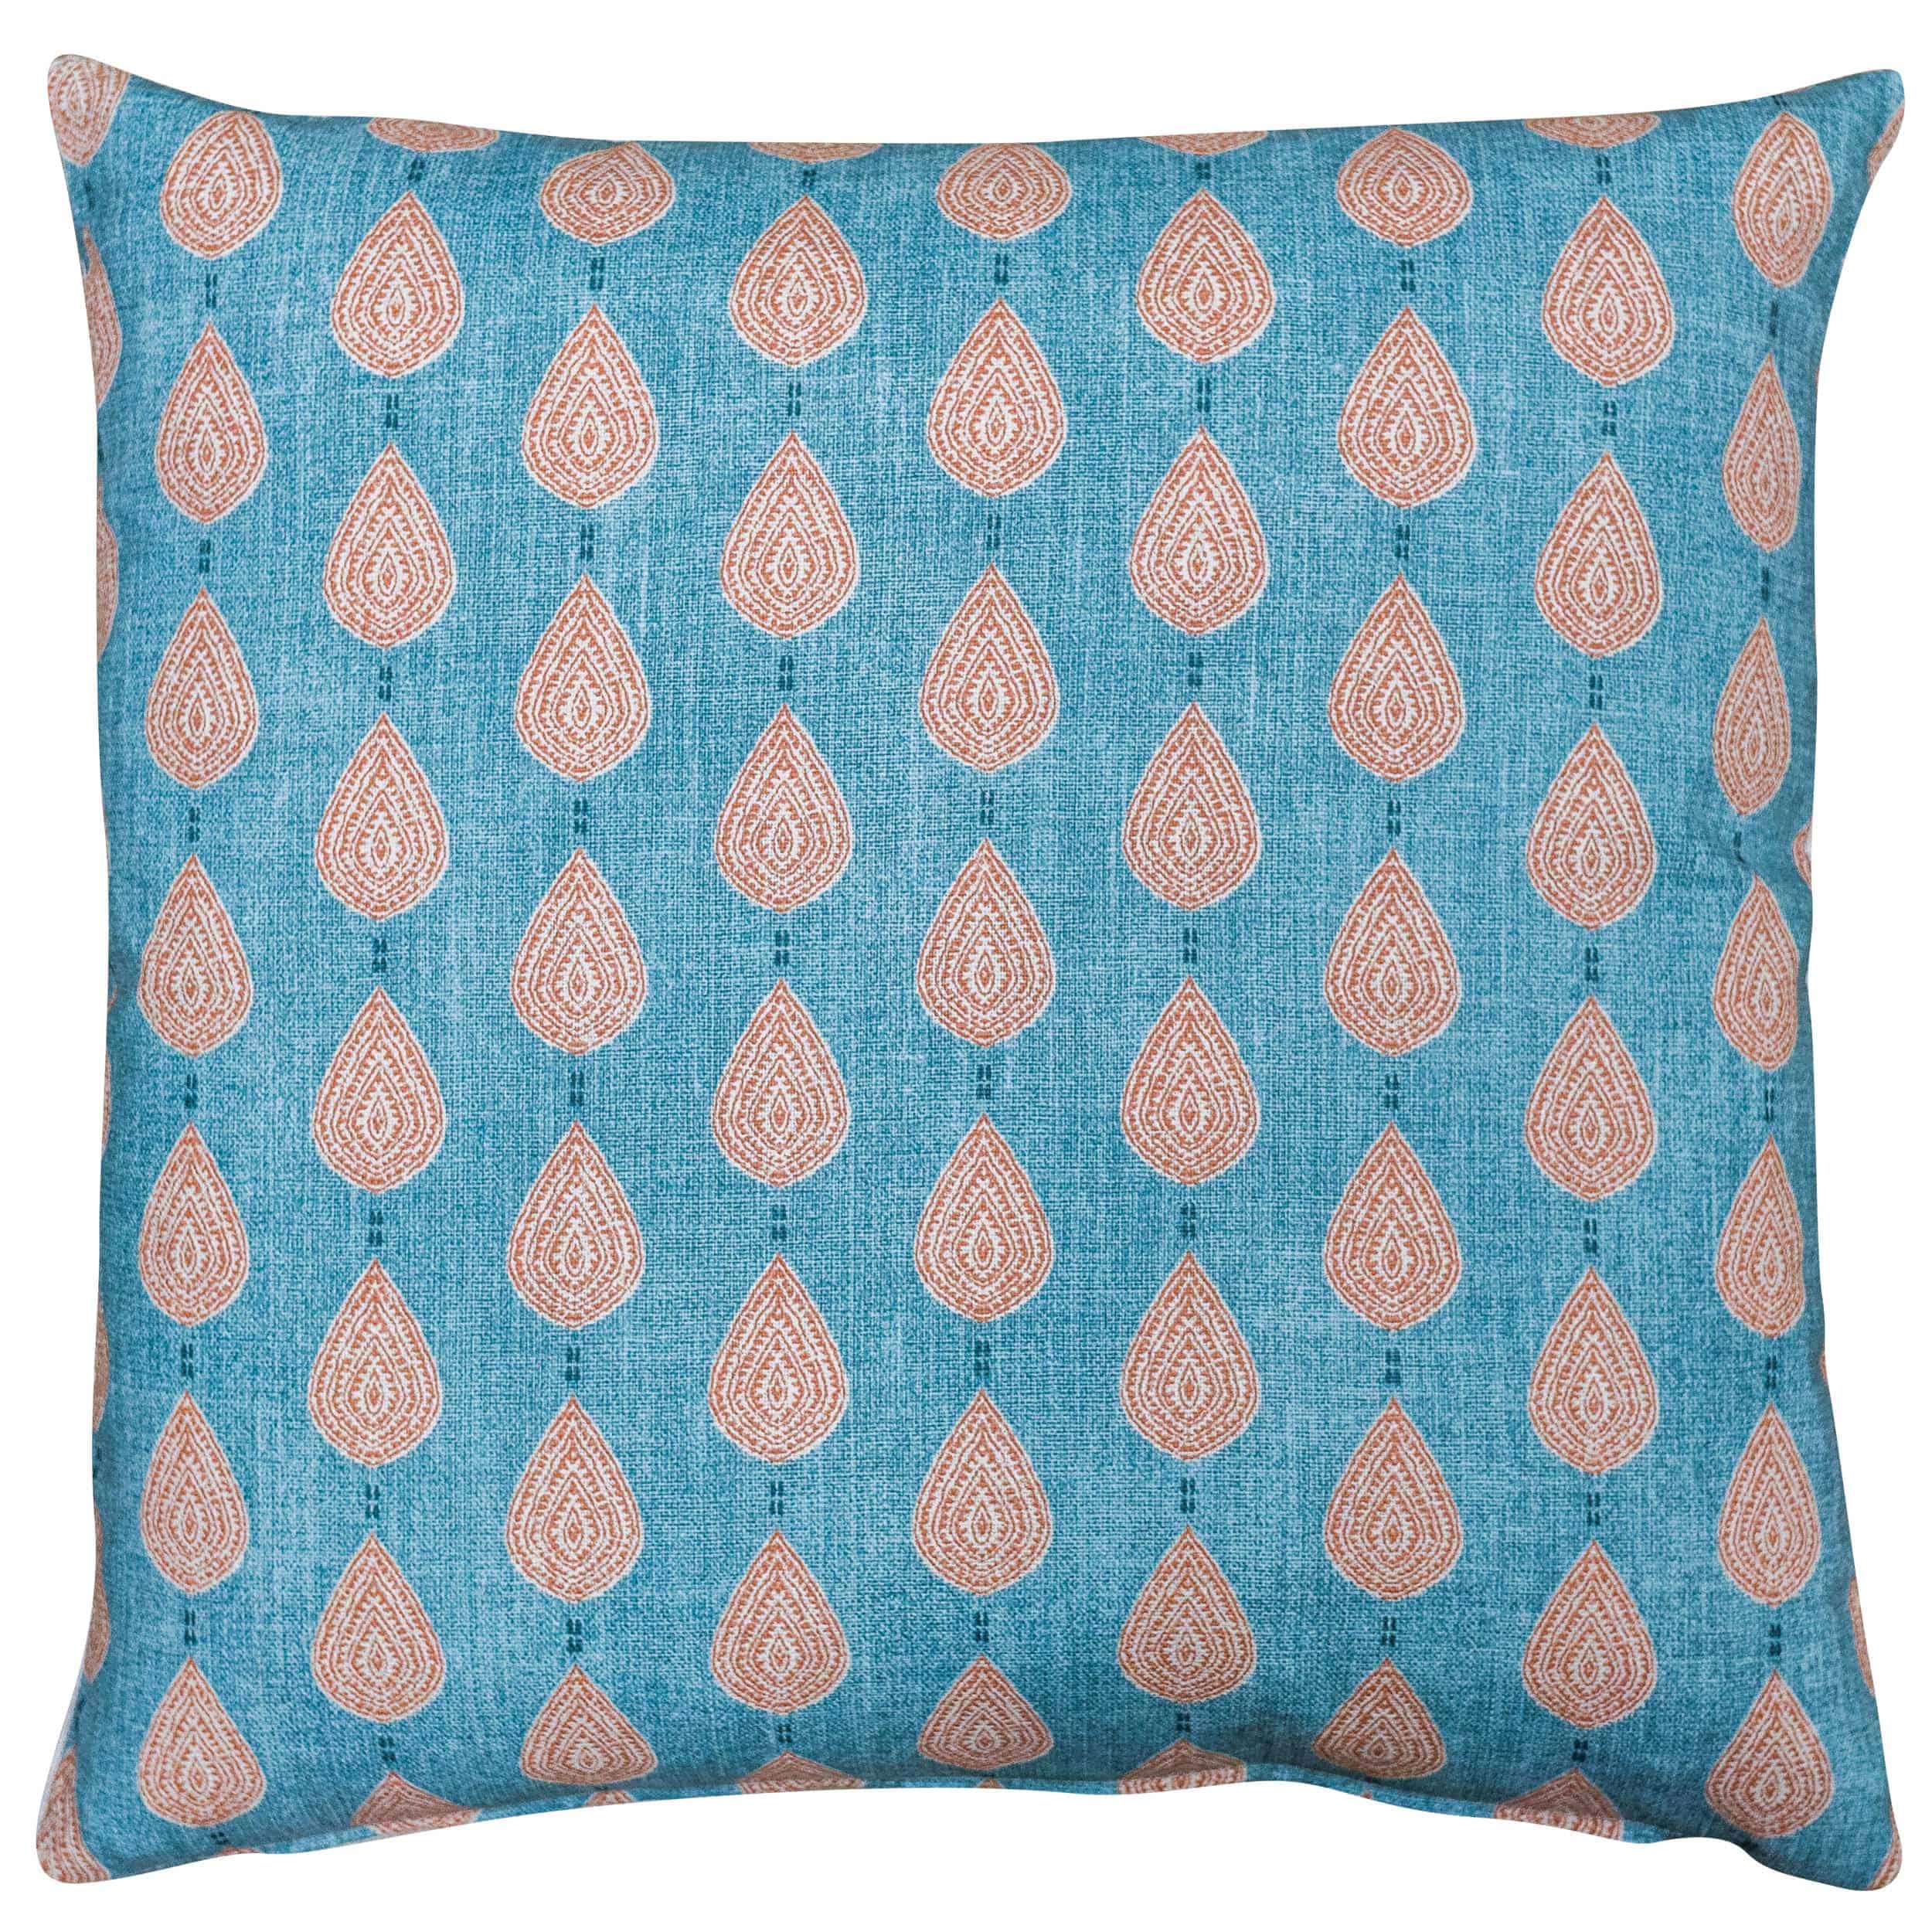 Kerala Batik Cushion in Teal Blue and Burnt Orange